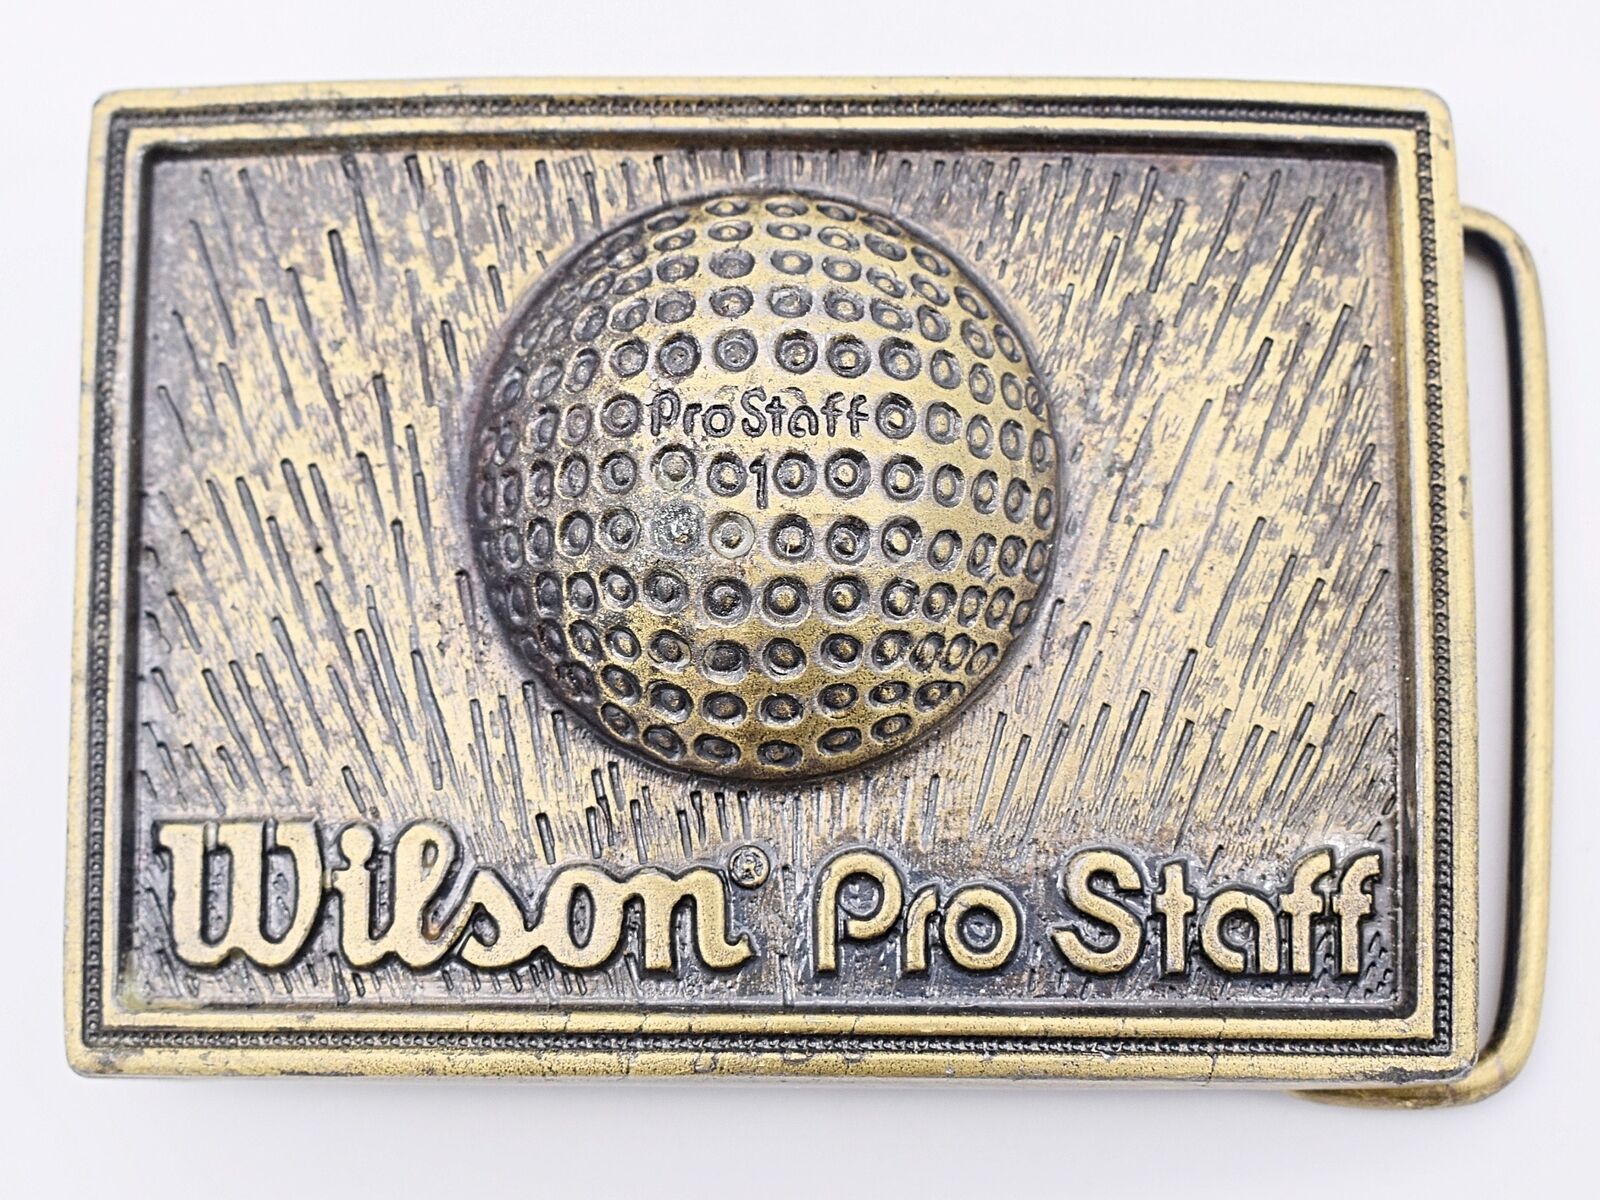 Wilson Pro Staff Golf Ball Vintage Belt Buckle